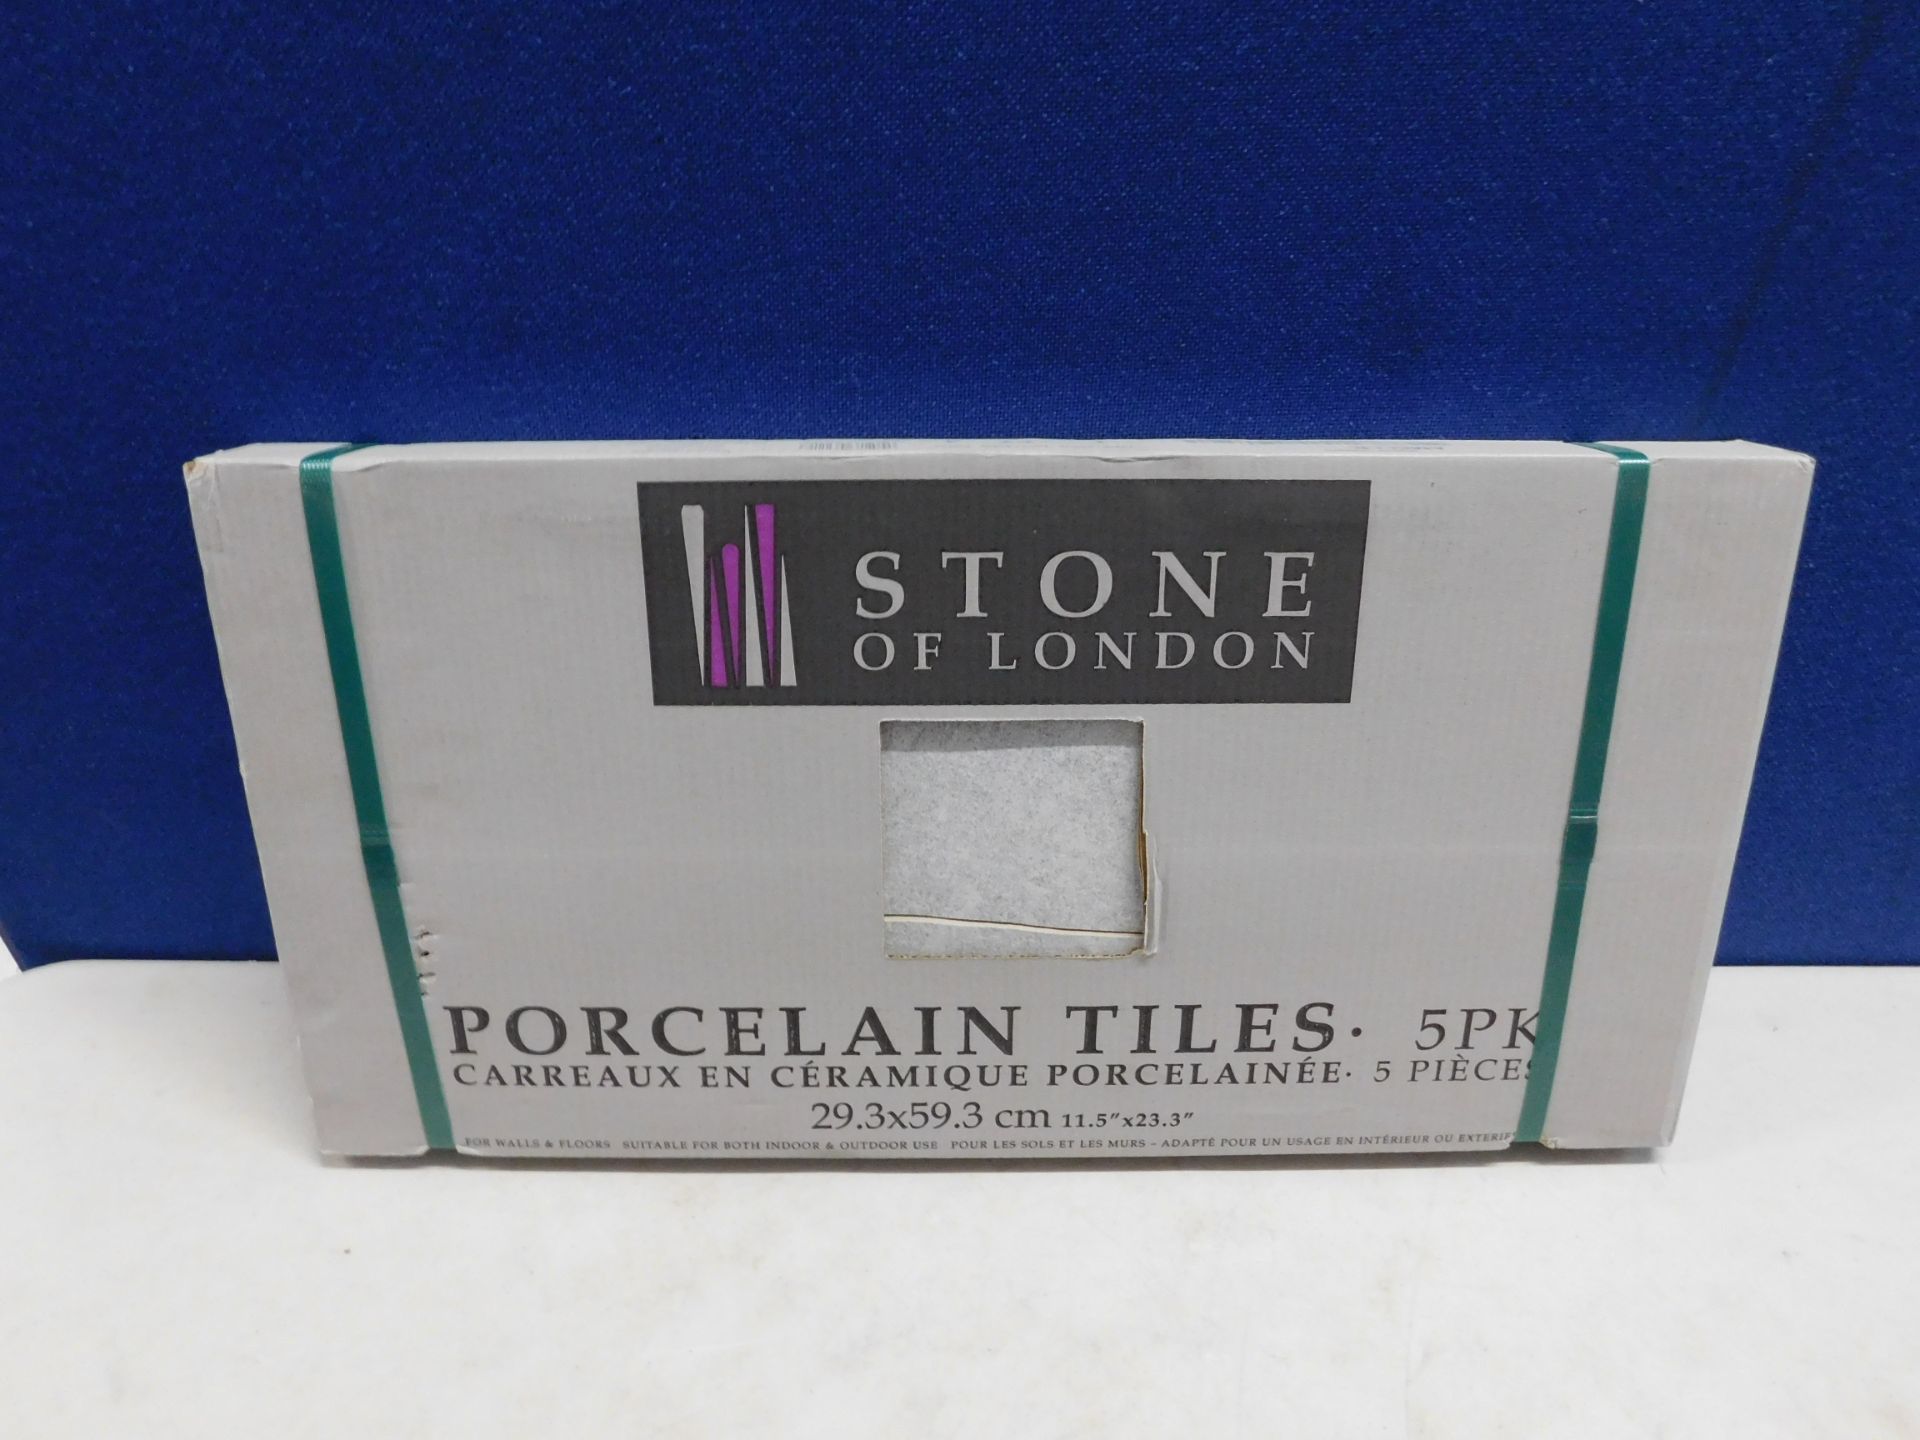 1 BOXED SET OF STONE OF LONDON PORCELAIN TILES (29.3 X 59.3) RRP Â£29.99